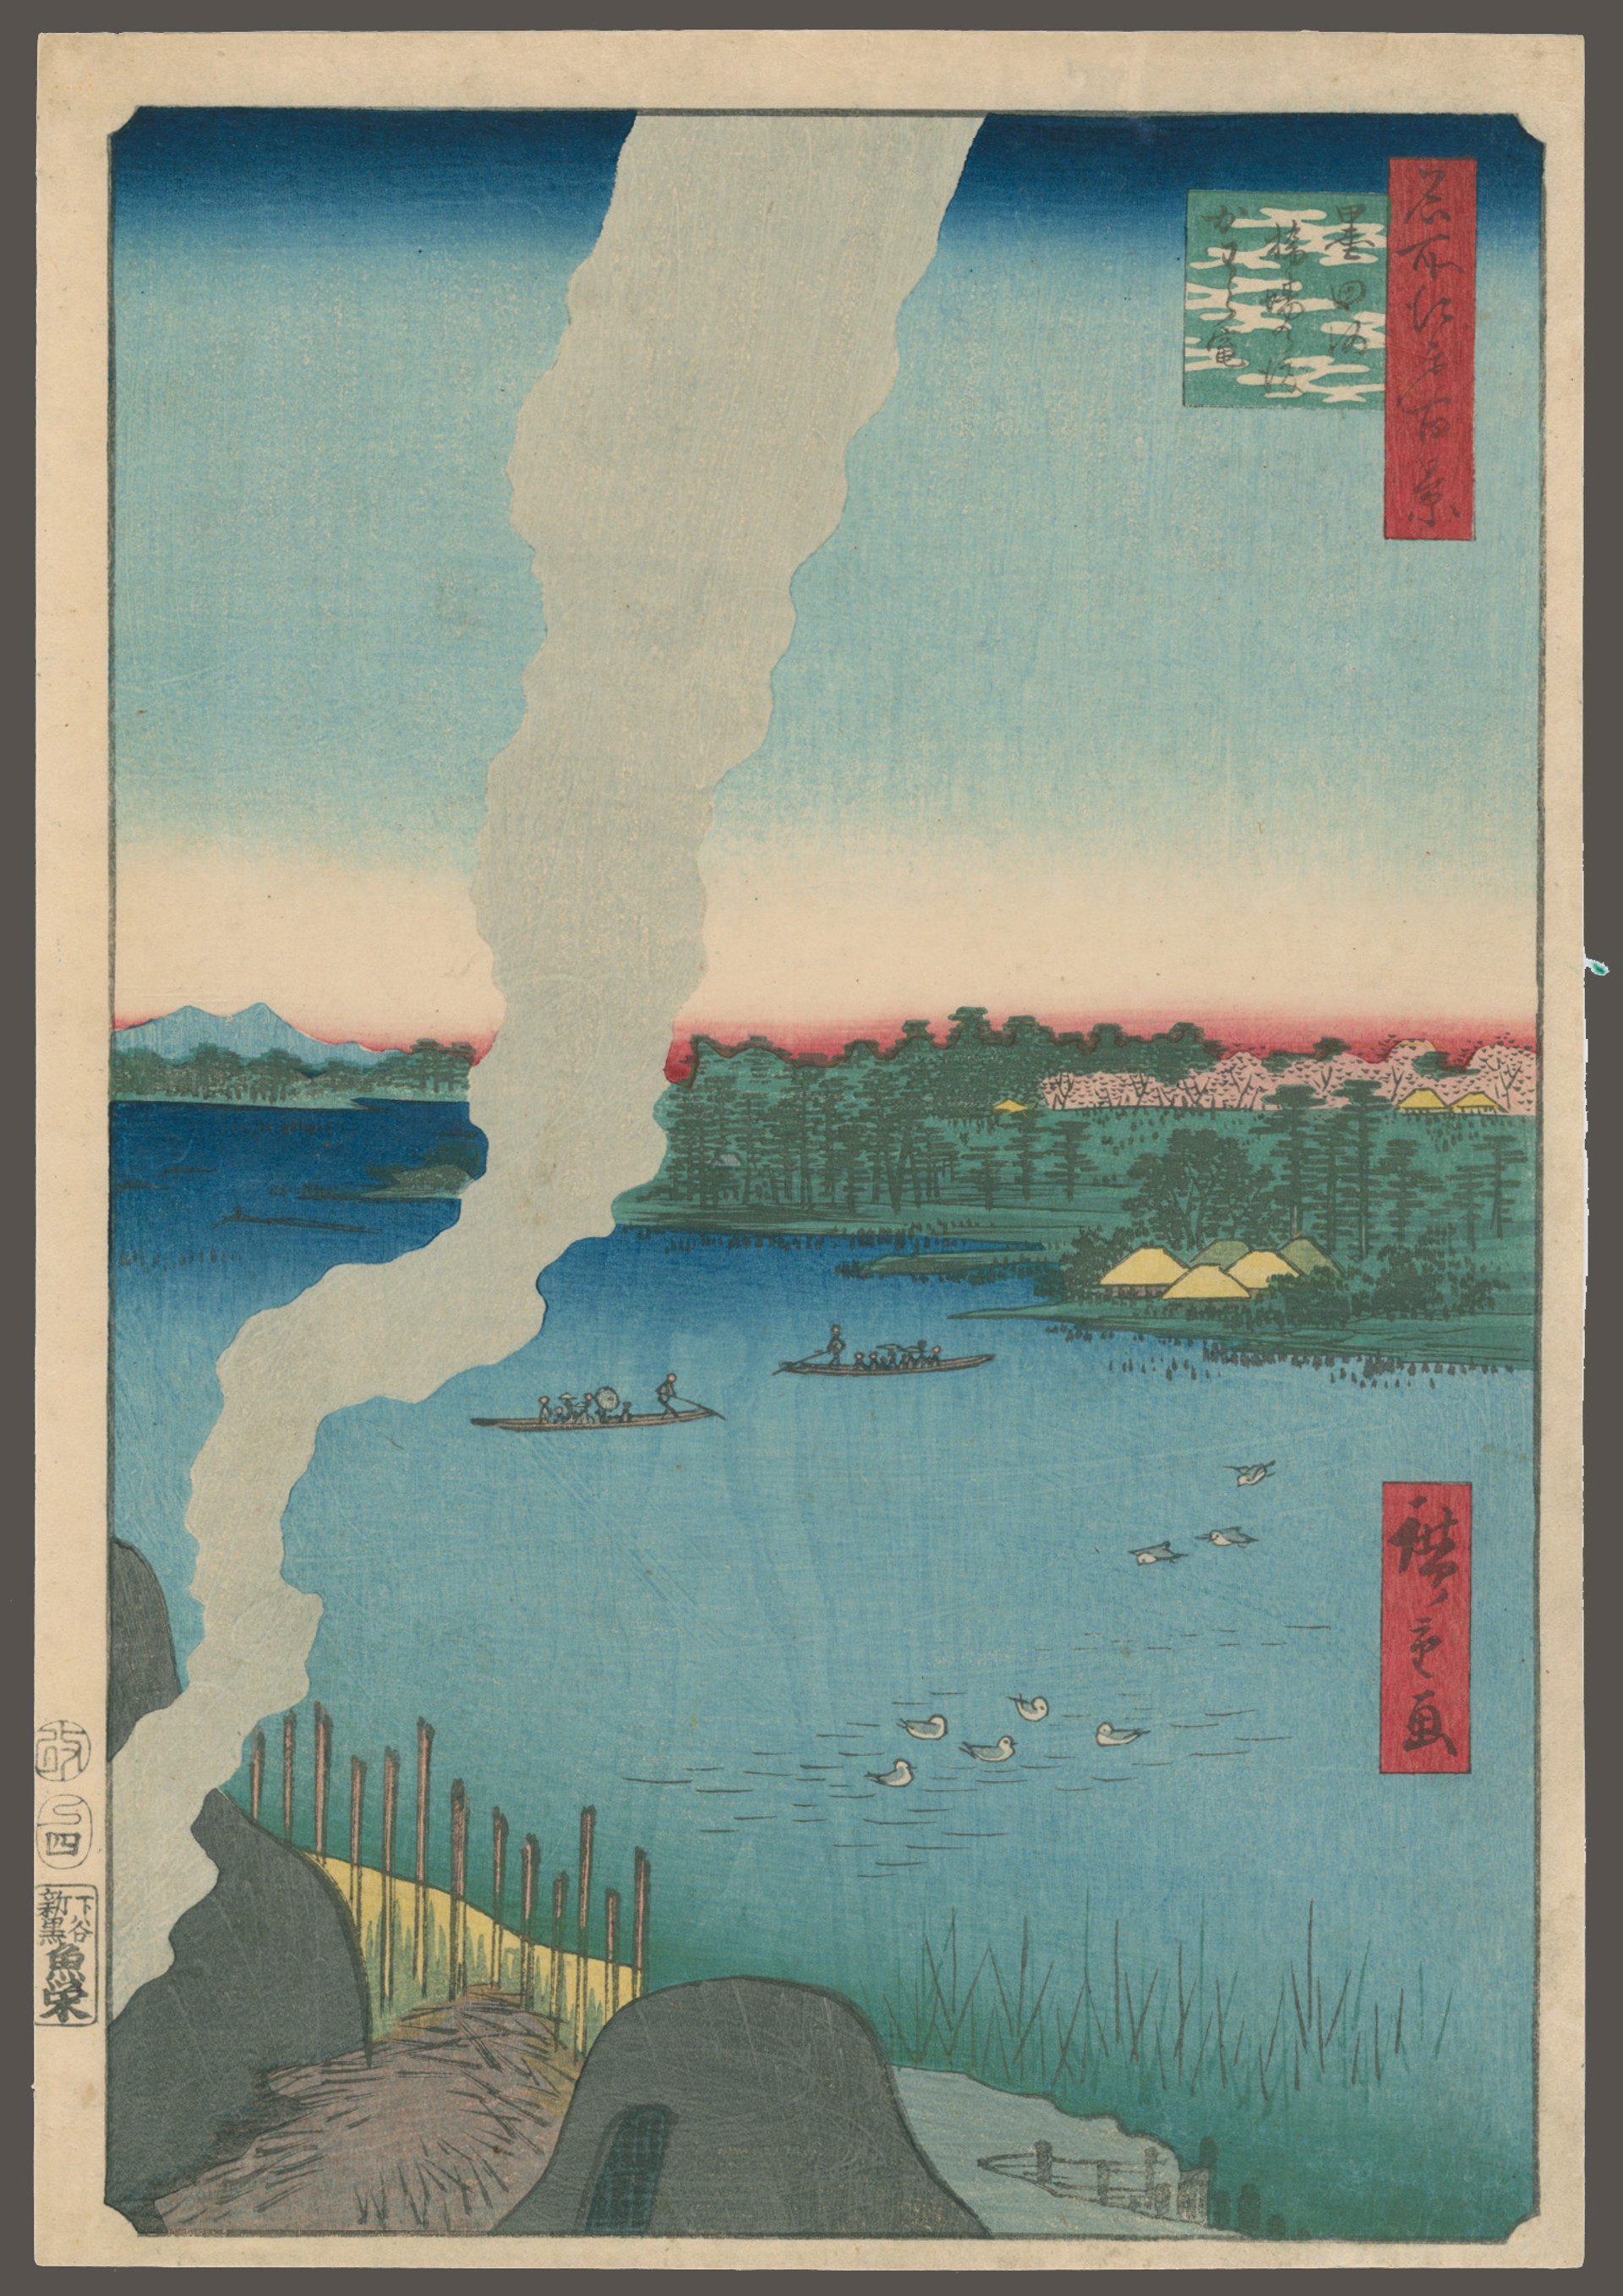 #37 Hashiba Ferry and Tile Kilns on the Sumida River 100 Views of Edo by Hiroshige